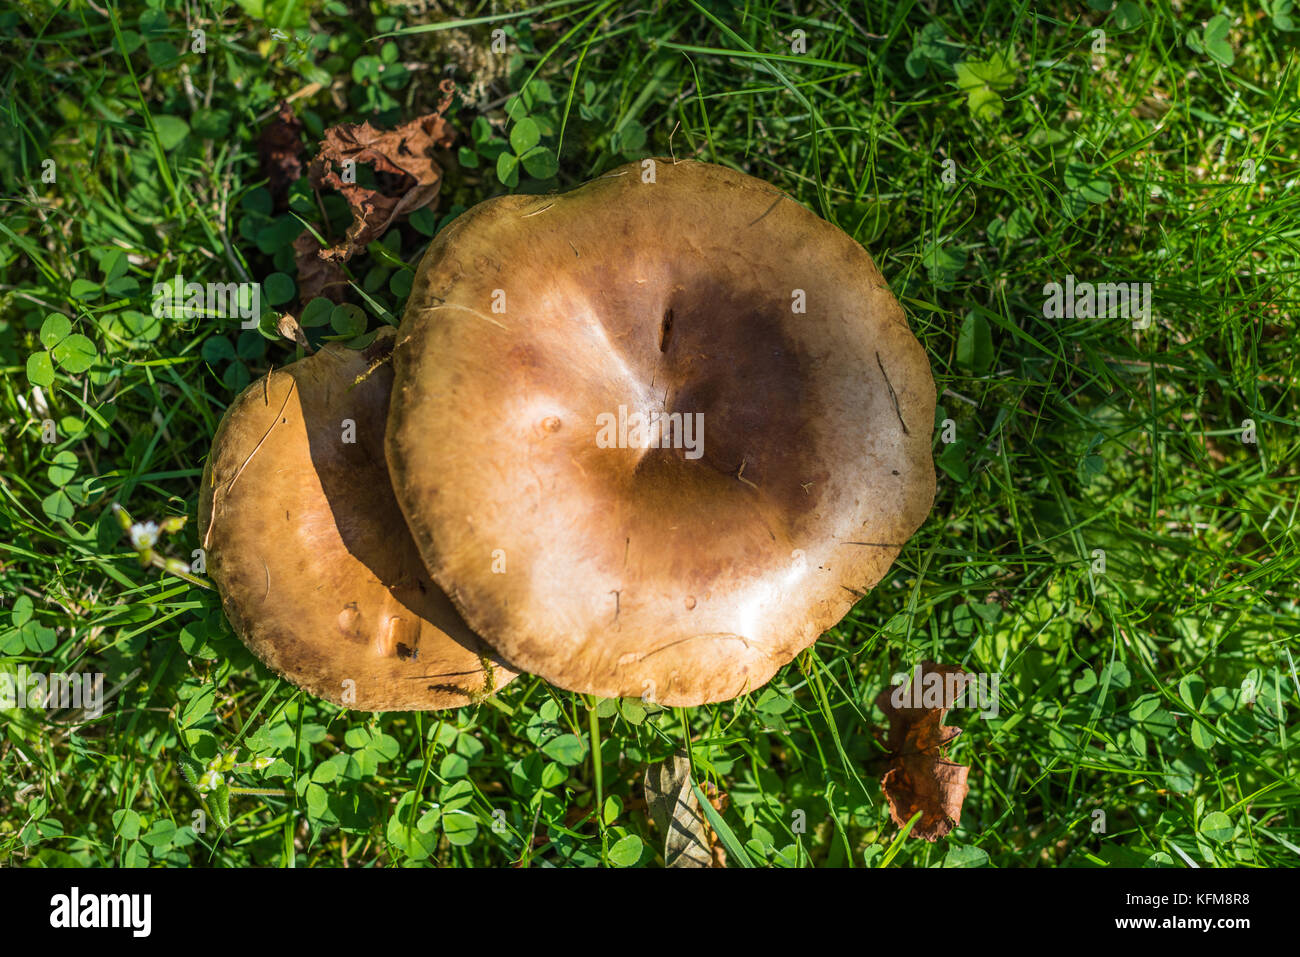 Mushrooms growing in grass. Stock Photo